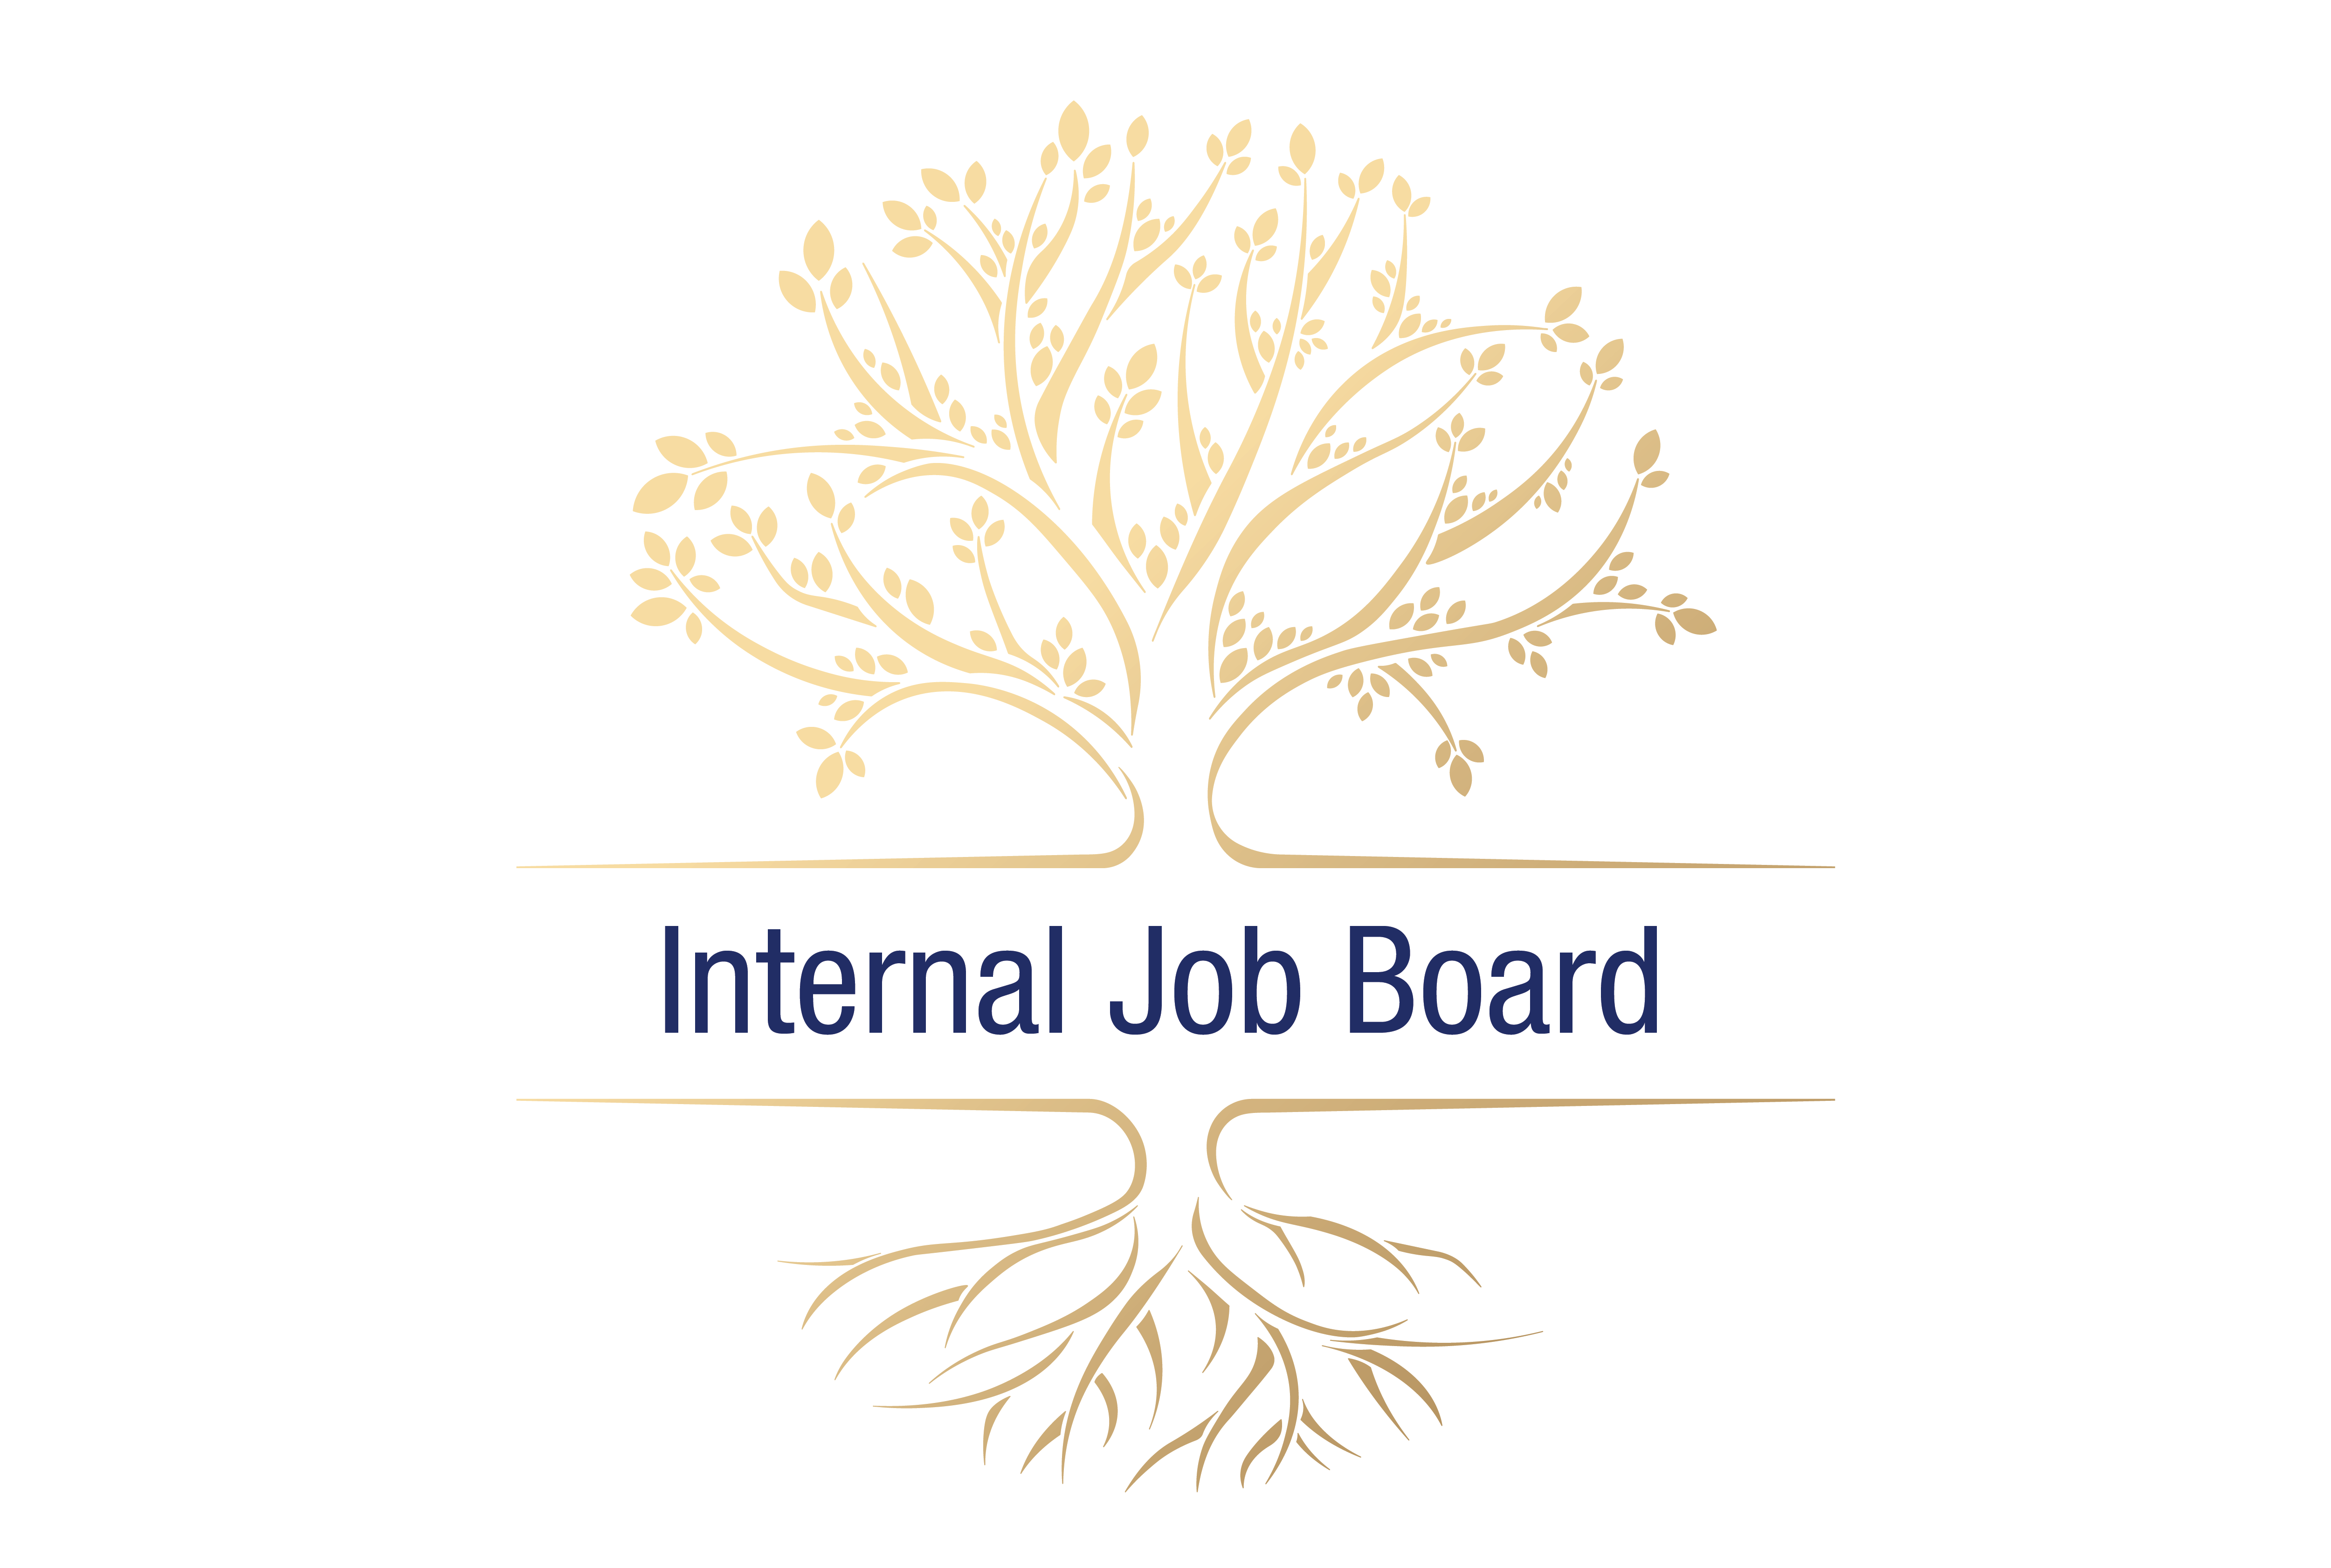 Visit our Internal Job Board